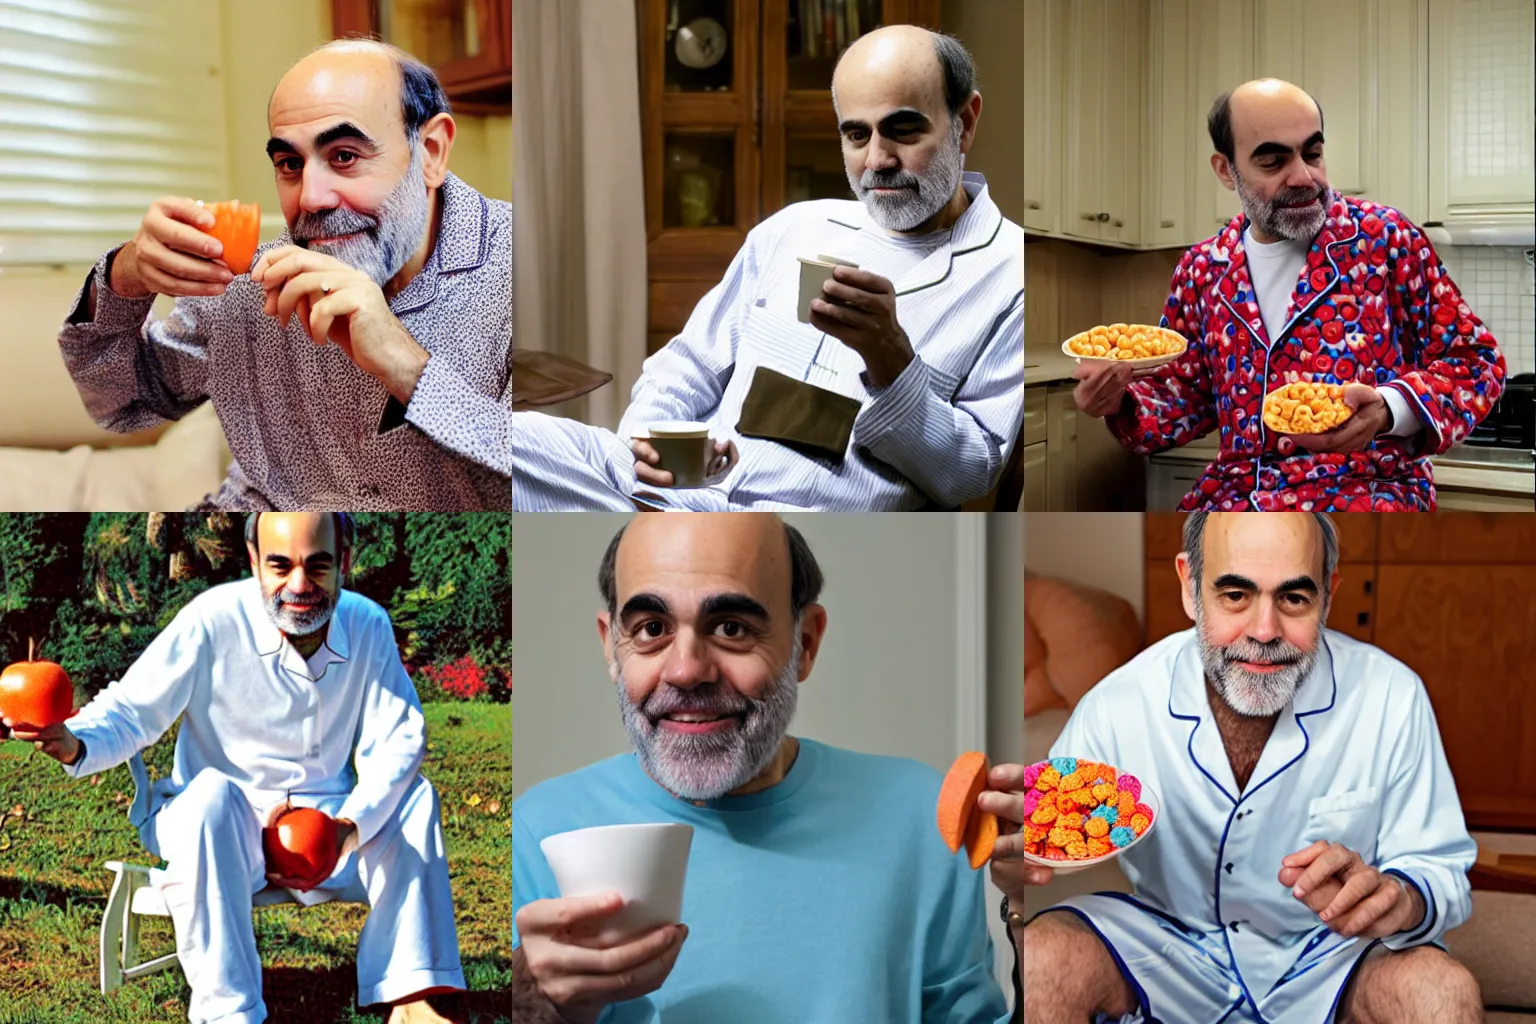 Prompt: Ben Bernanke eating fruit loops in his pajamas